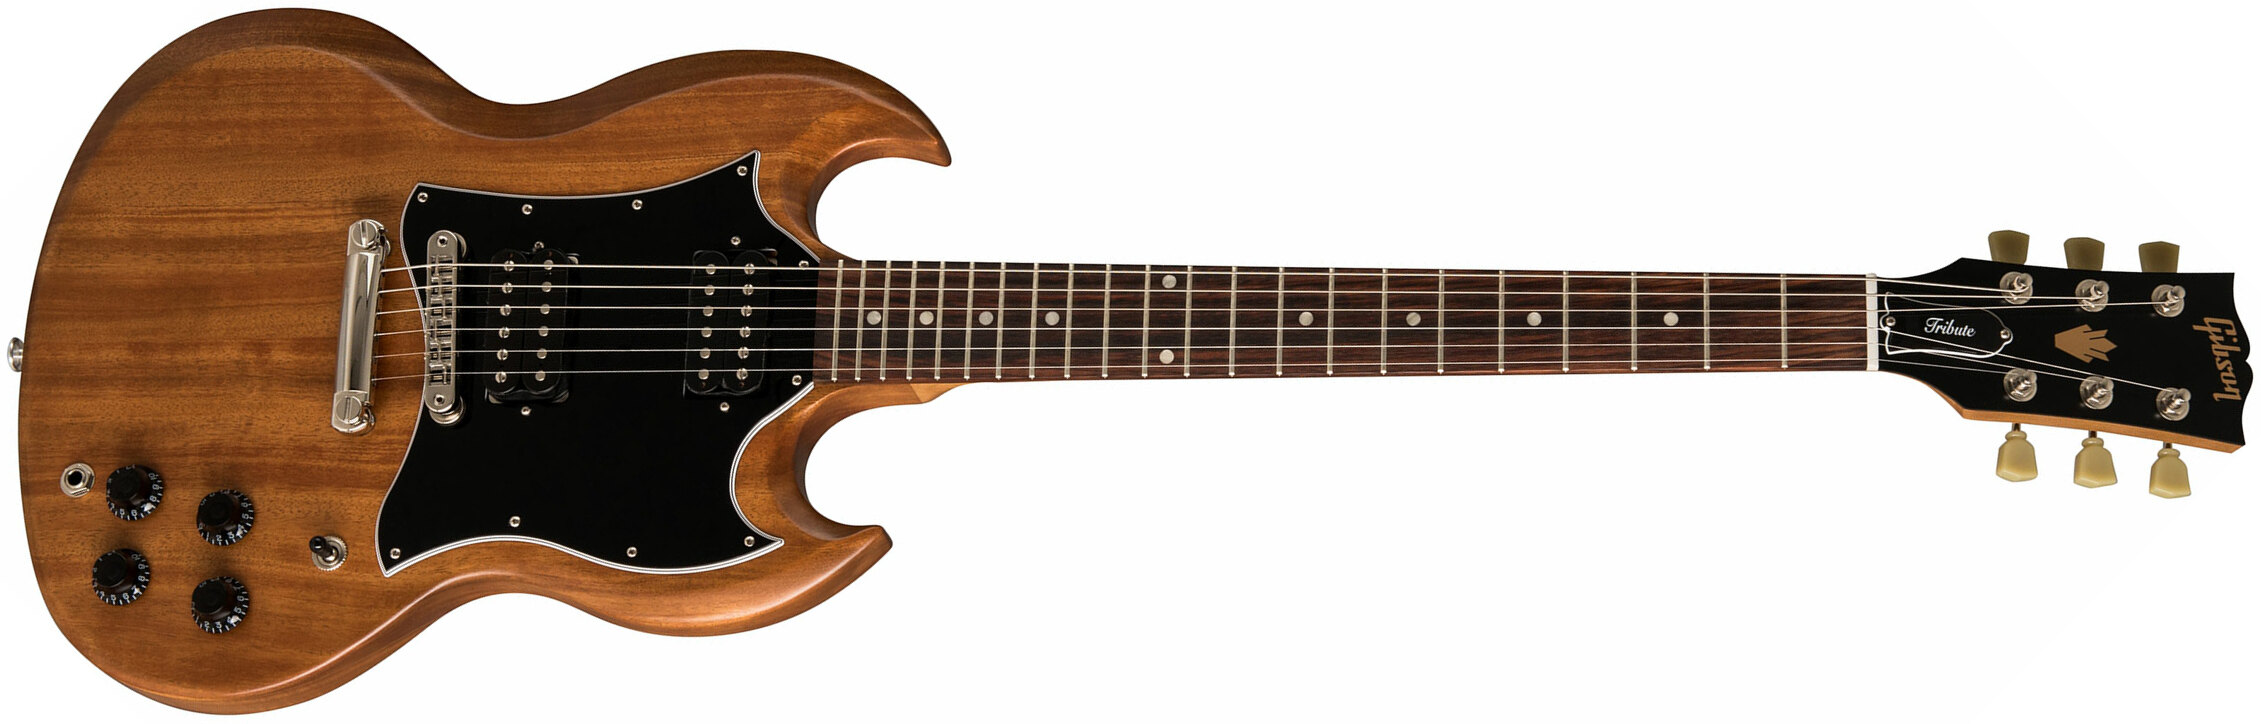 Gibson Sg Standard Tribute - Natural Walnut - Guitarra eléctrica de doble corte. - Main picture